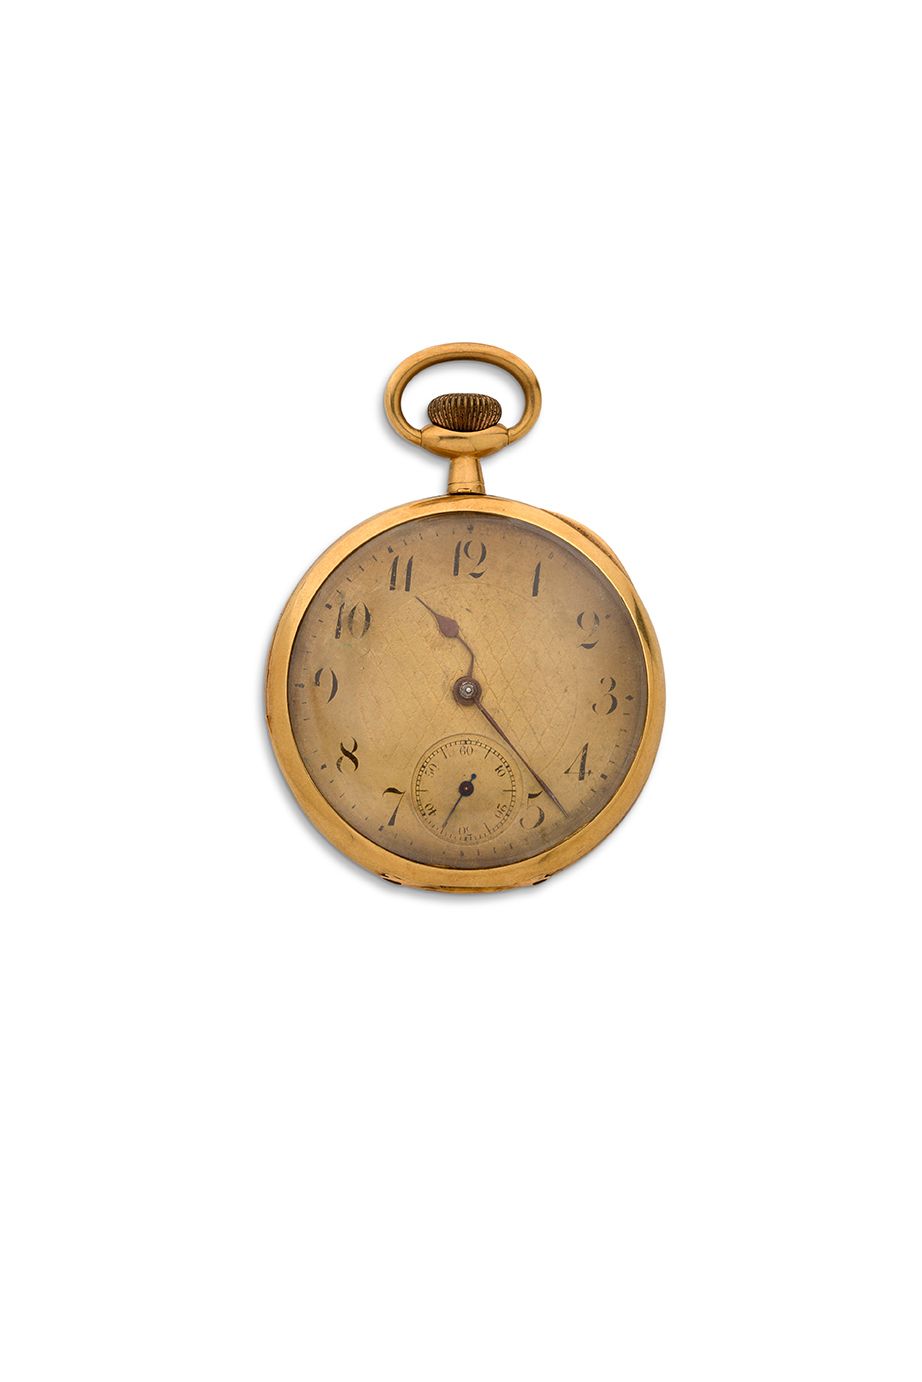 ANONYME 
Reloj de bolsillo de oro con cuerda de corona



Caja redonda con bisag&hellip;